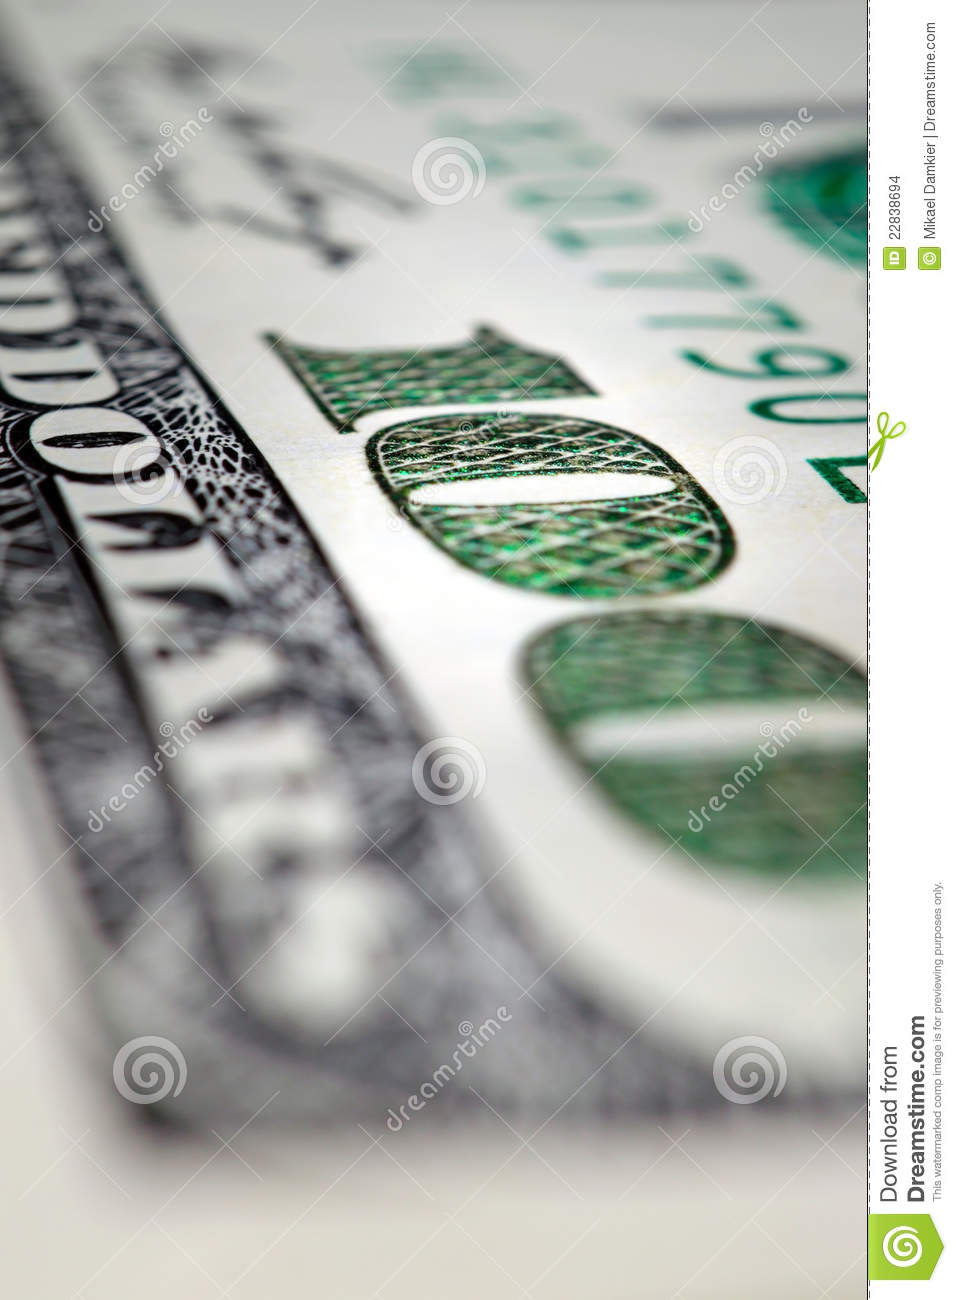 Close Up Photo Of A  100 Bills